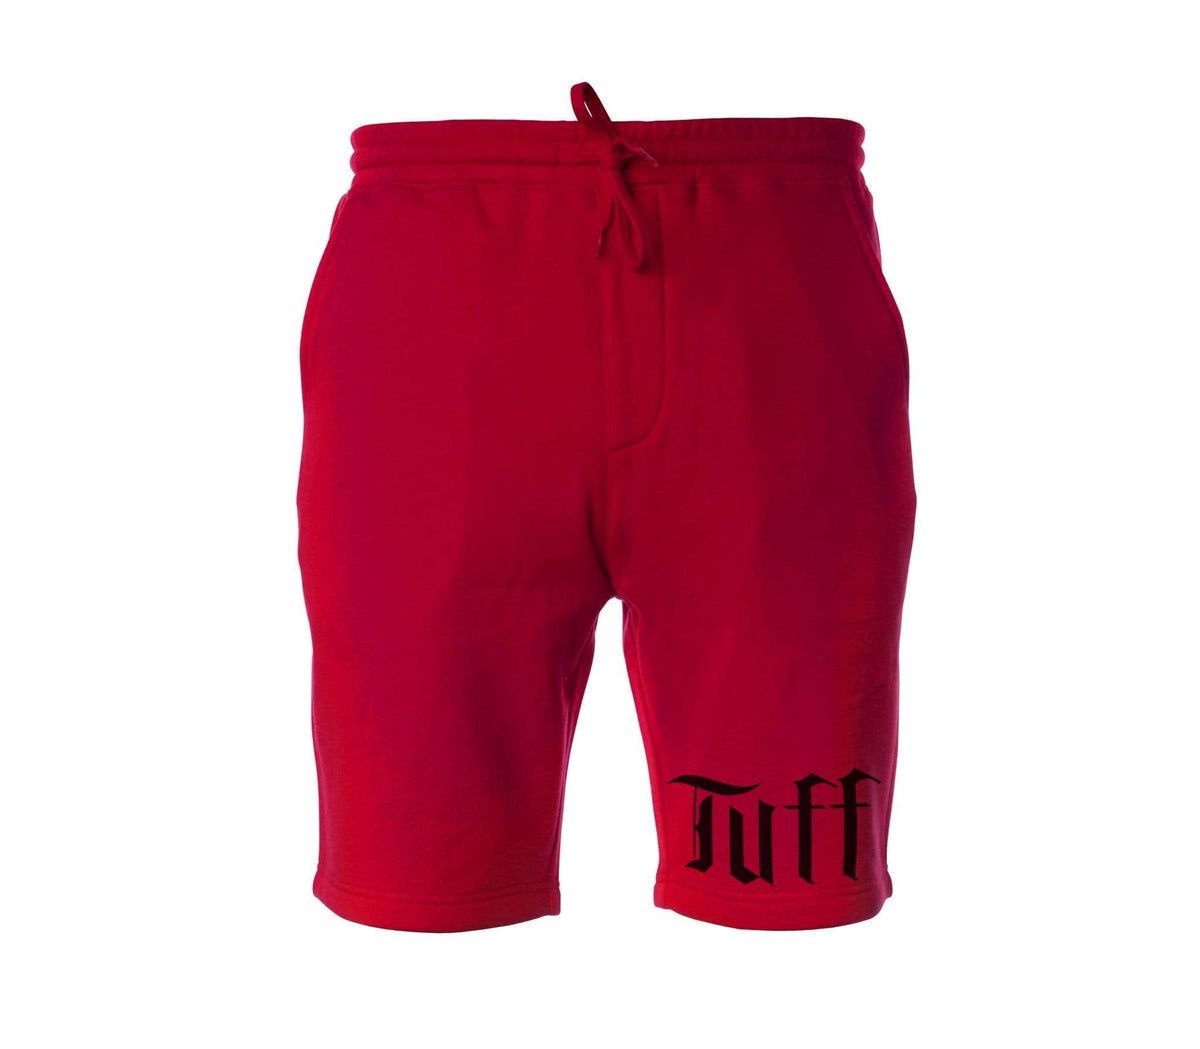 Olde TUFF Tapered Fleece Shorts XS / Red TuffWraps.com